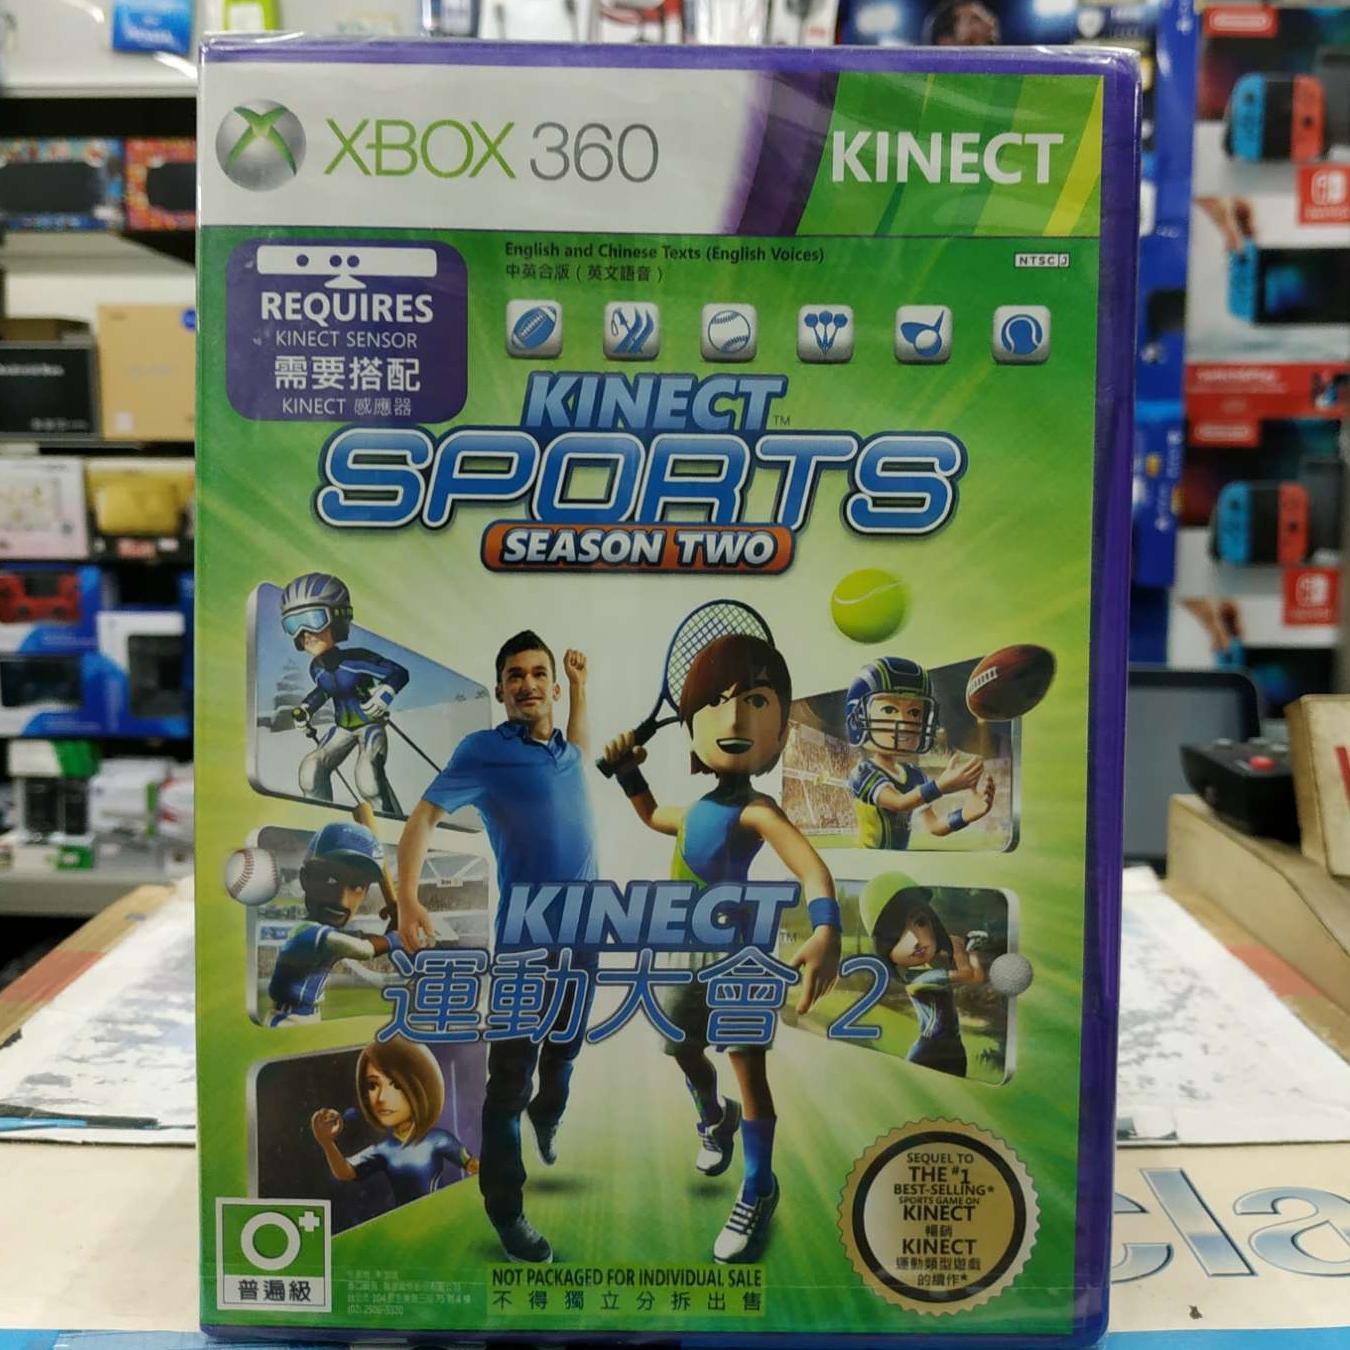 Xbox360 Kinect Sports Season Two